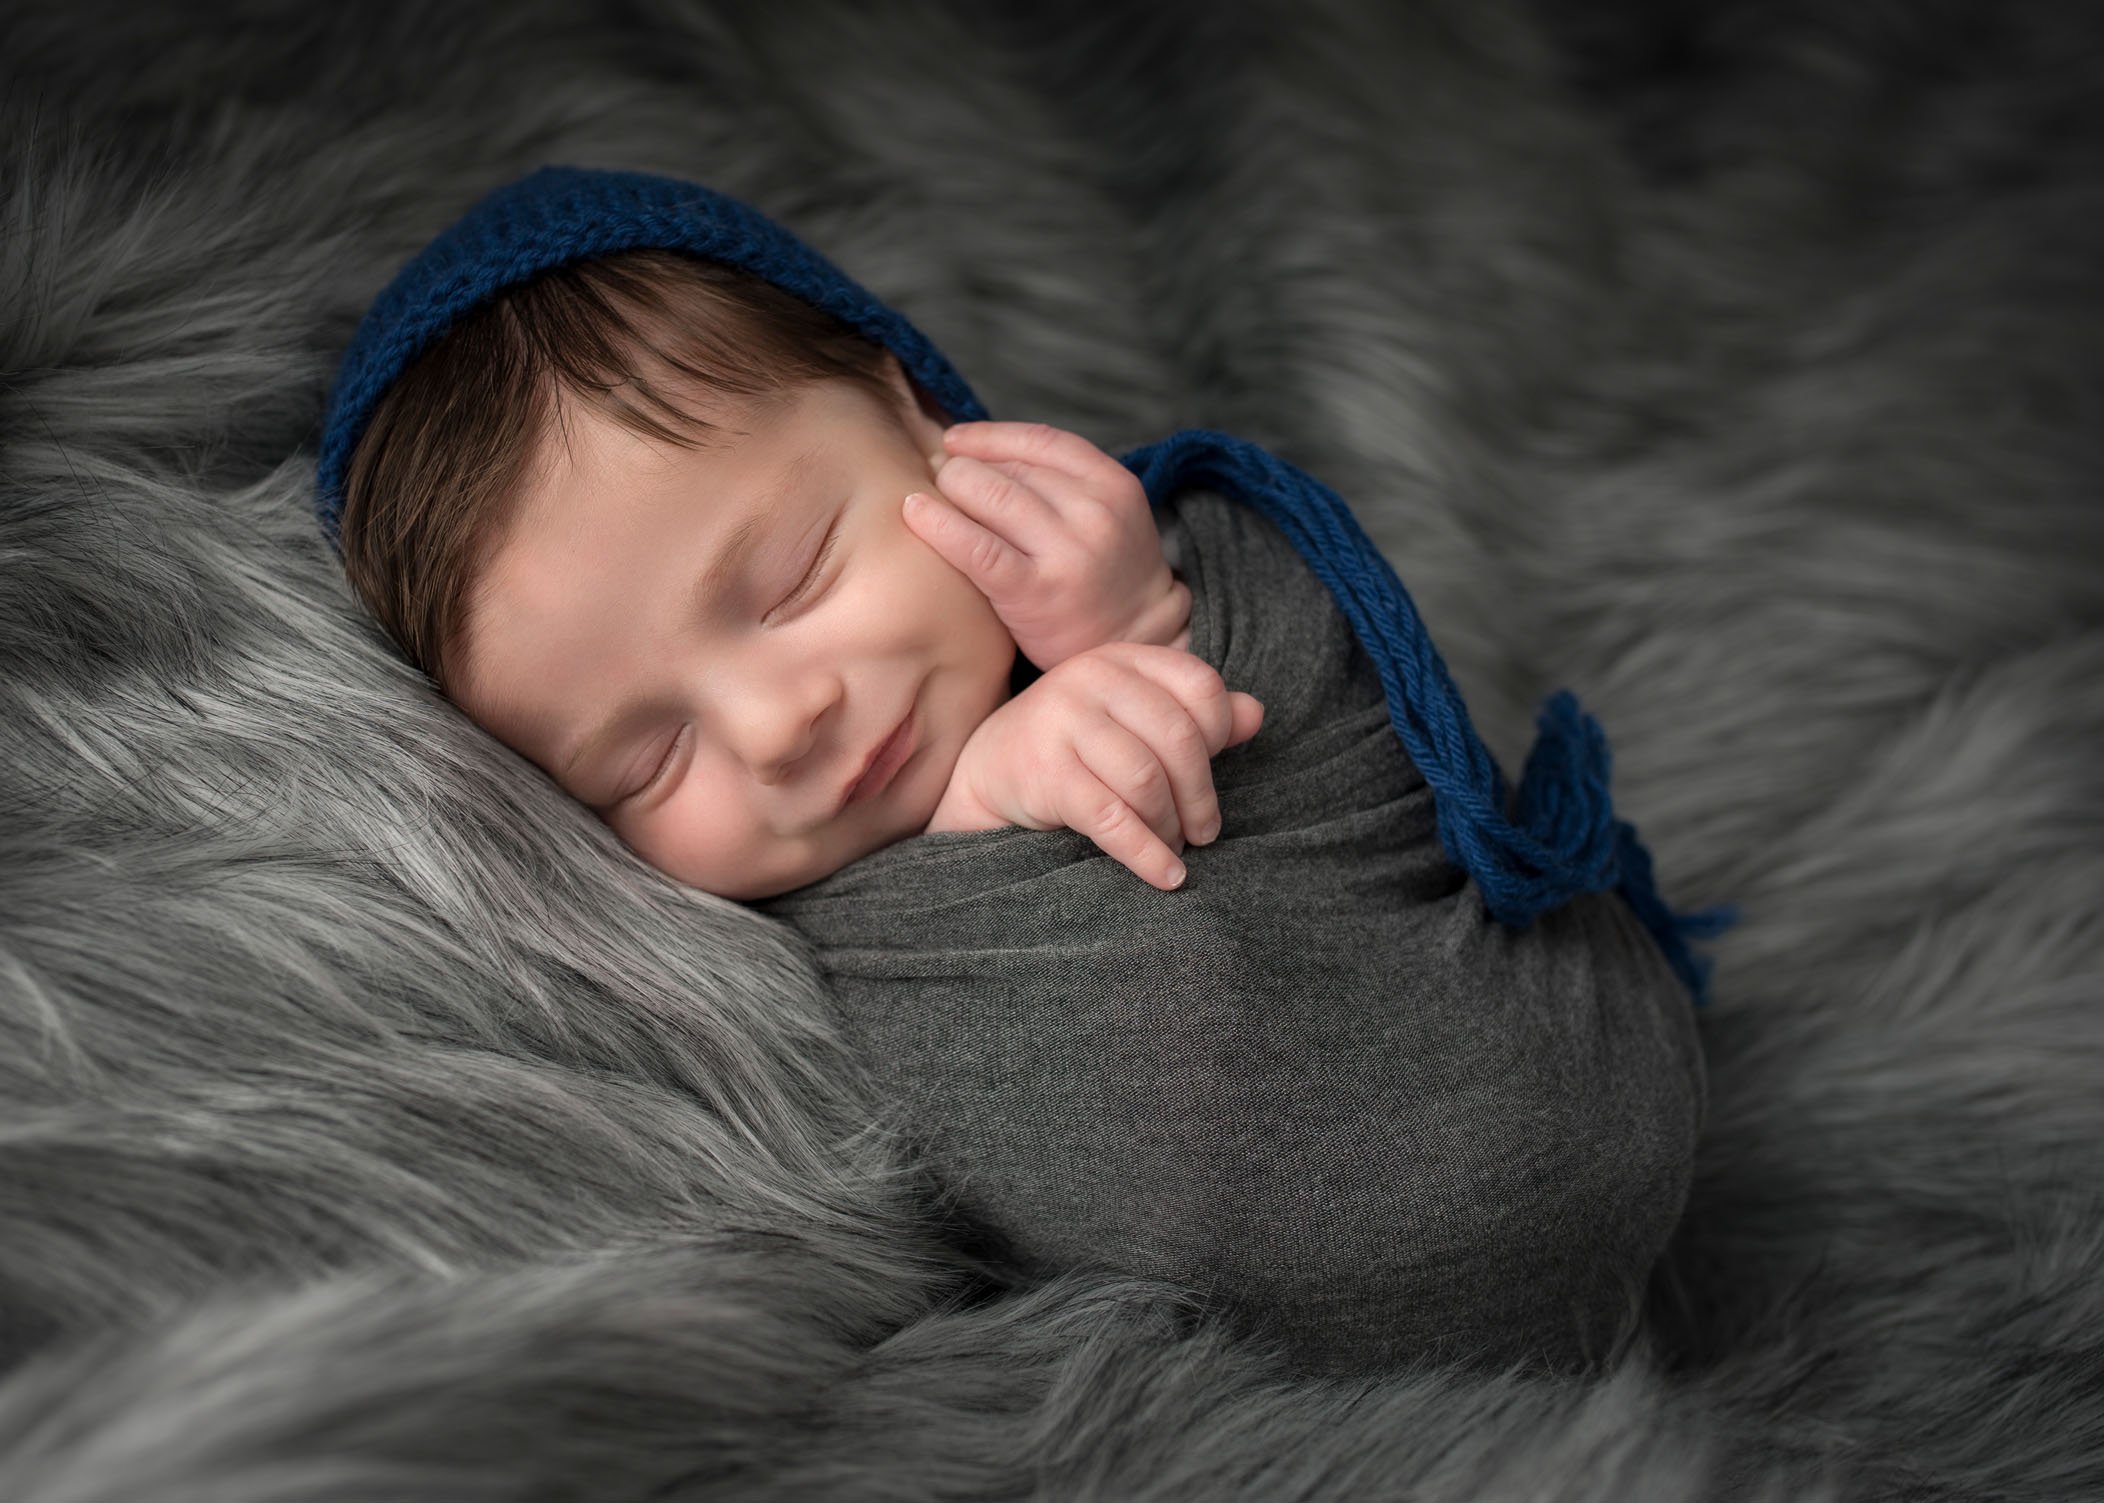 newborn boy swaddled, smiling while sleeping on grey fur